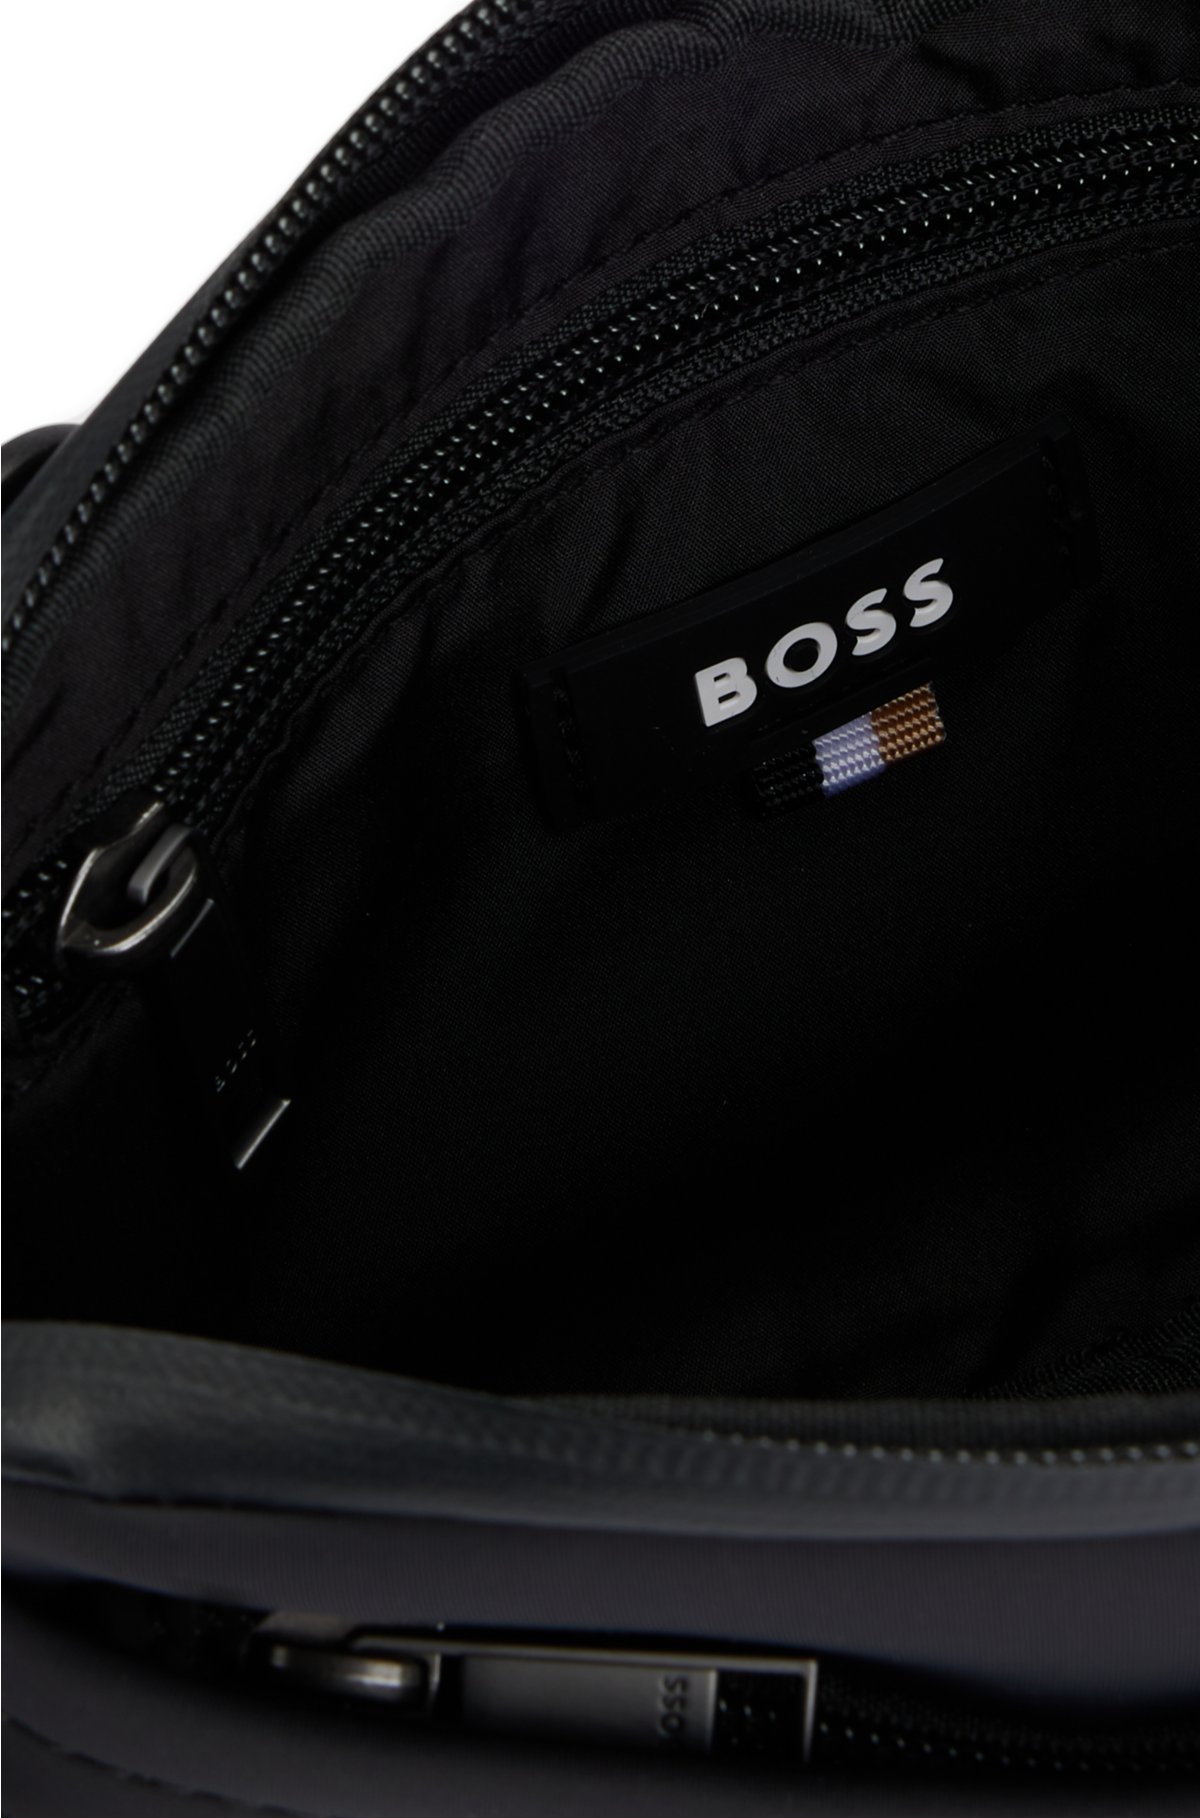 BOSS - Neoprene reporter bag with embossed and printed logos